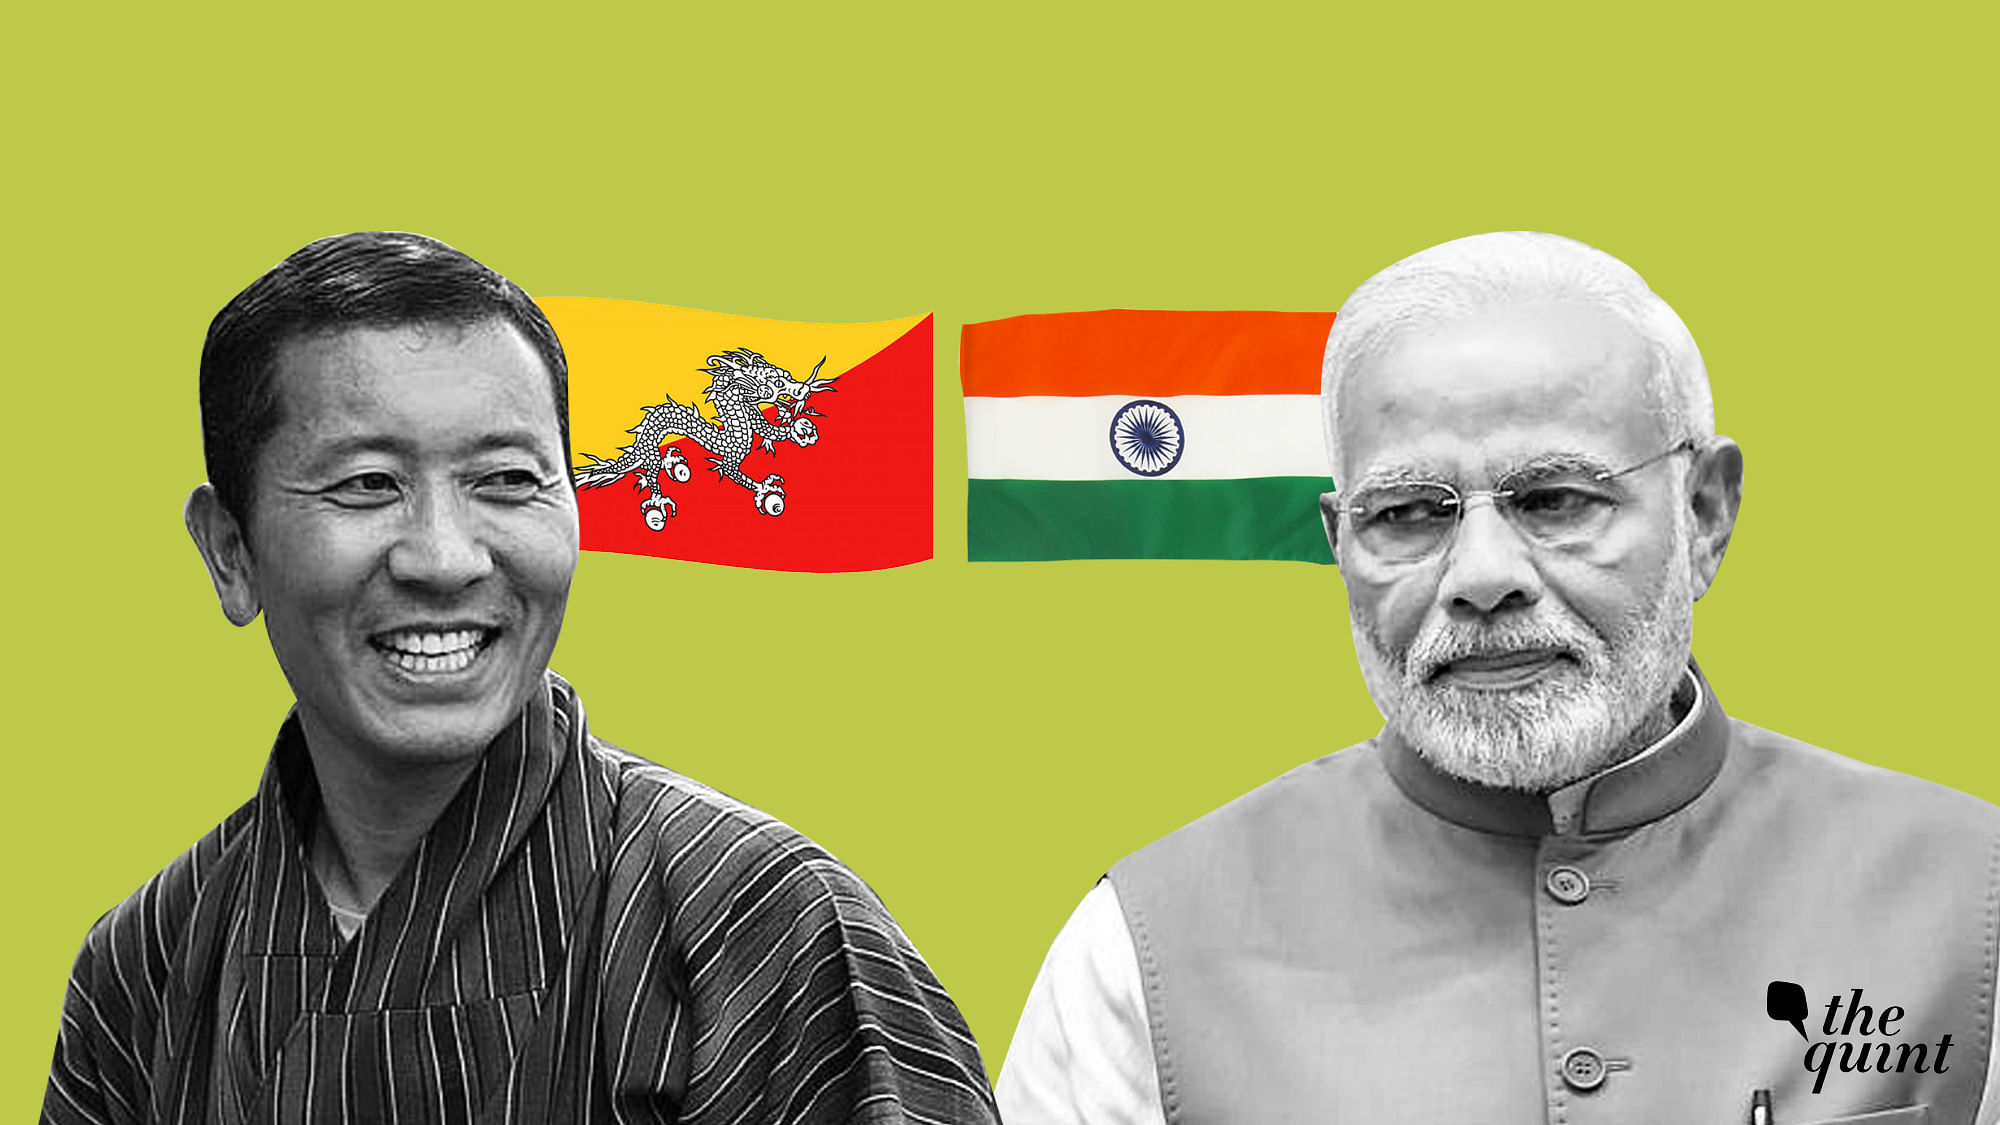 Image of Bhutan PM and Indian PM Modi used for representational purposes.